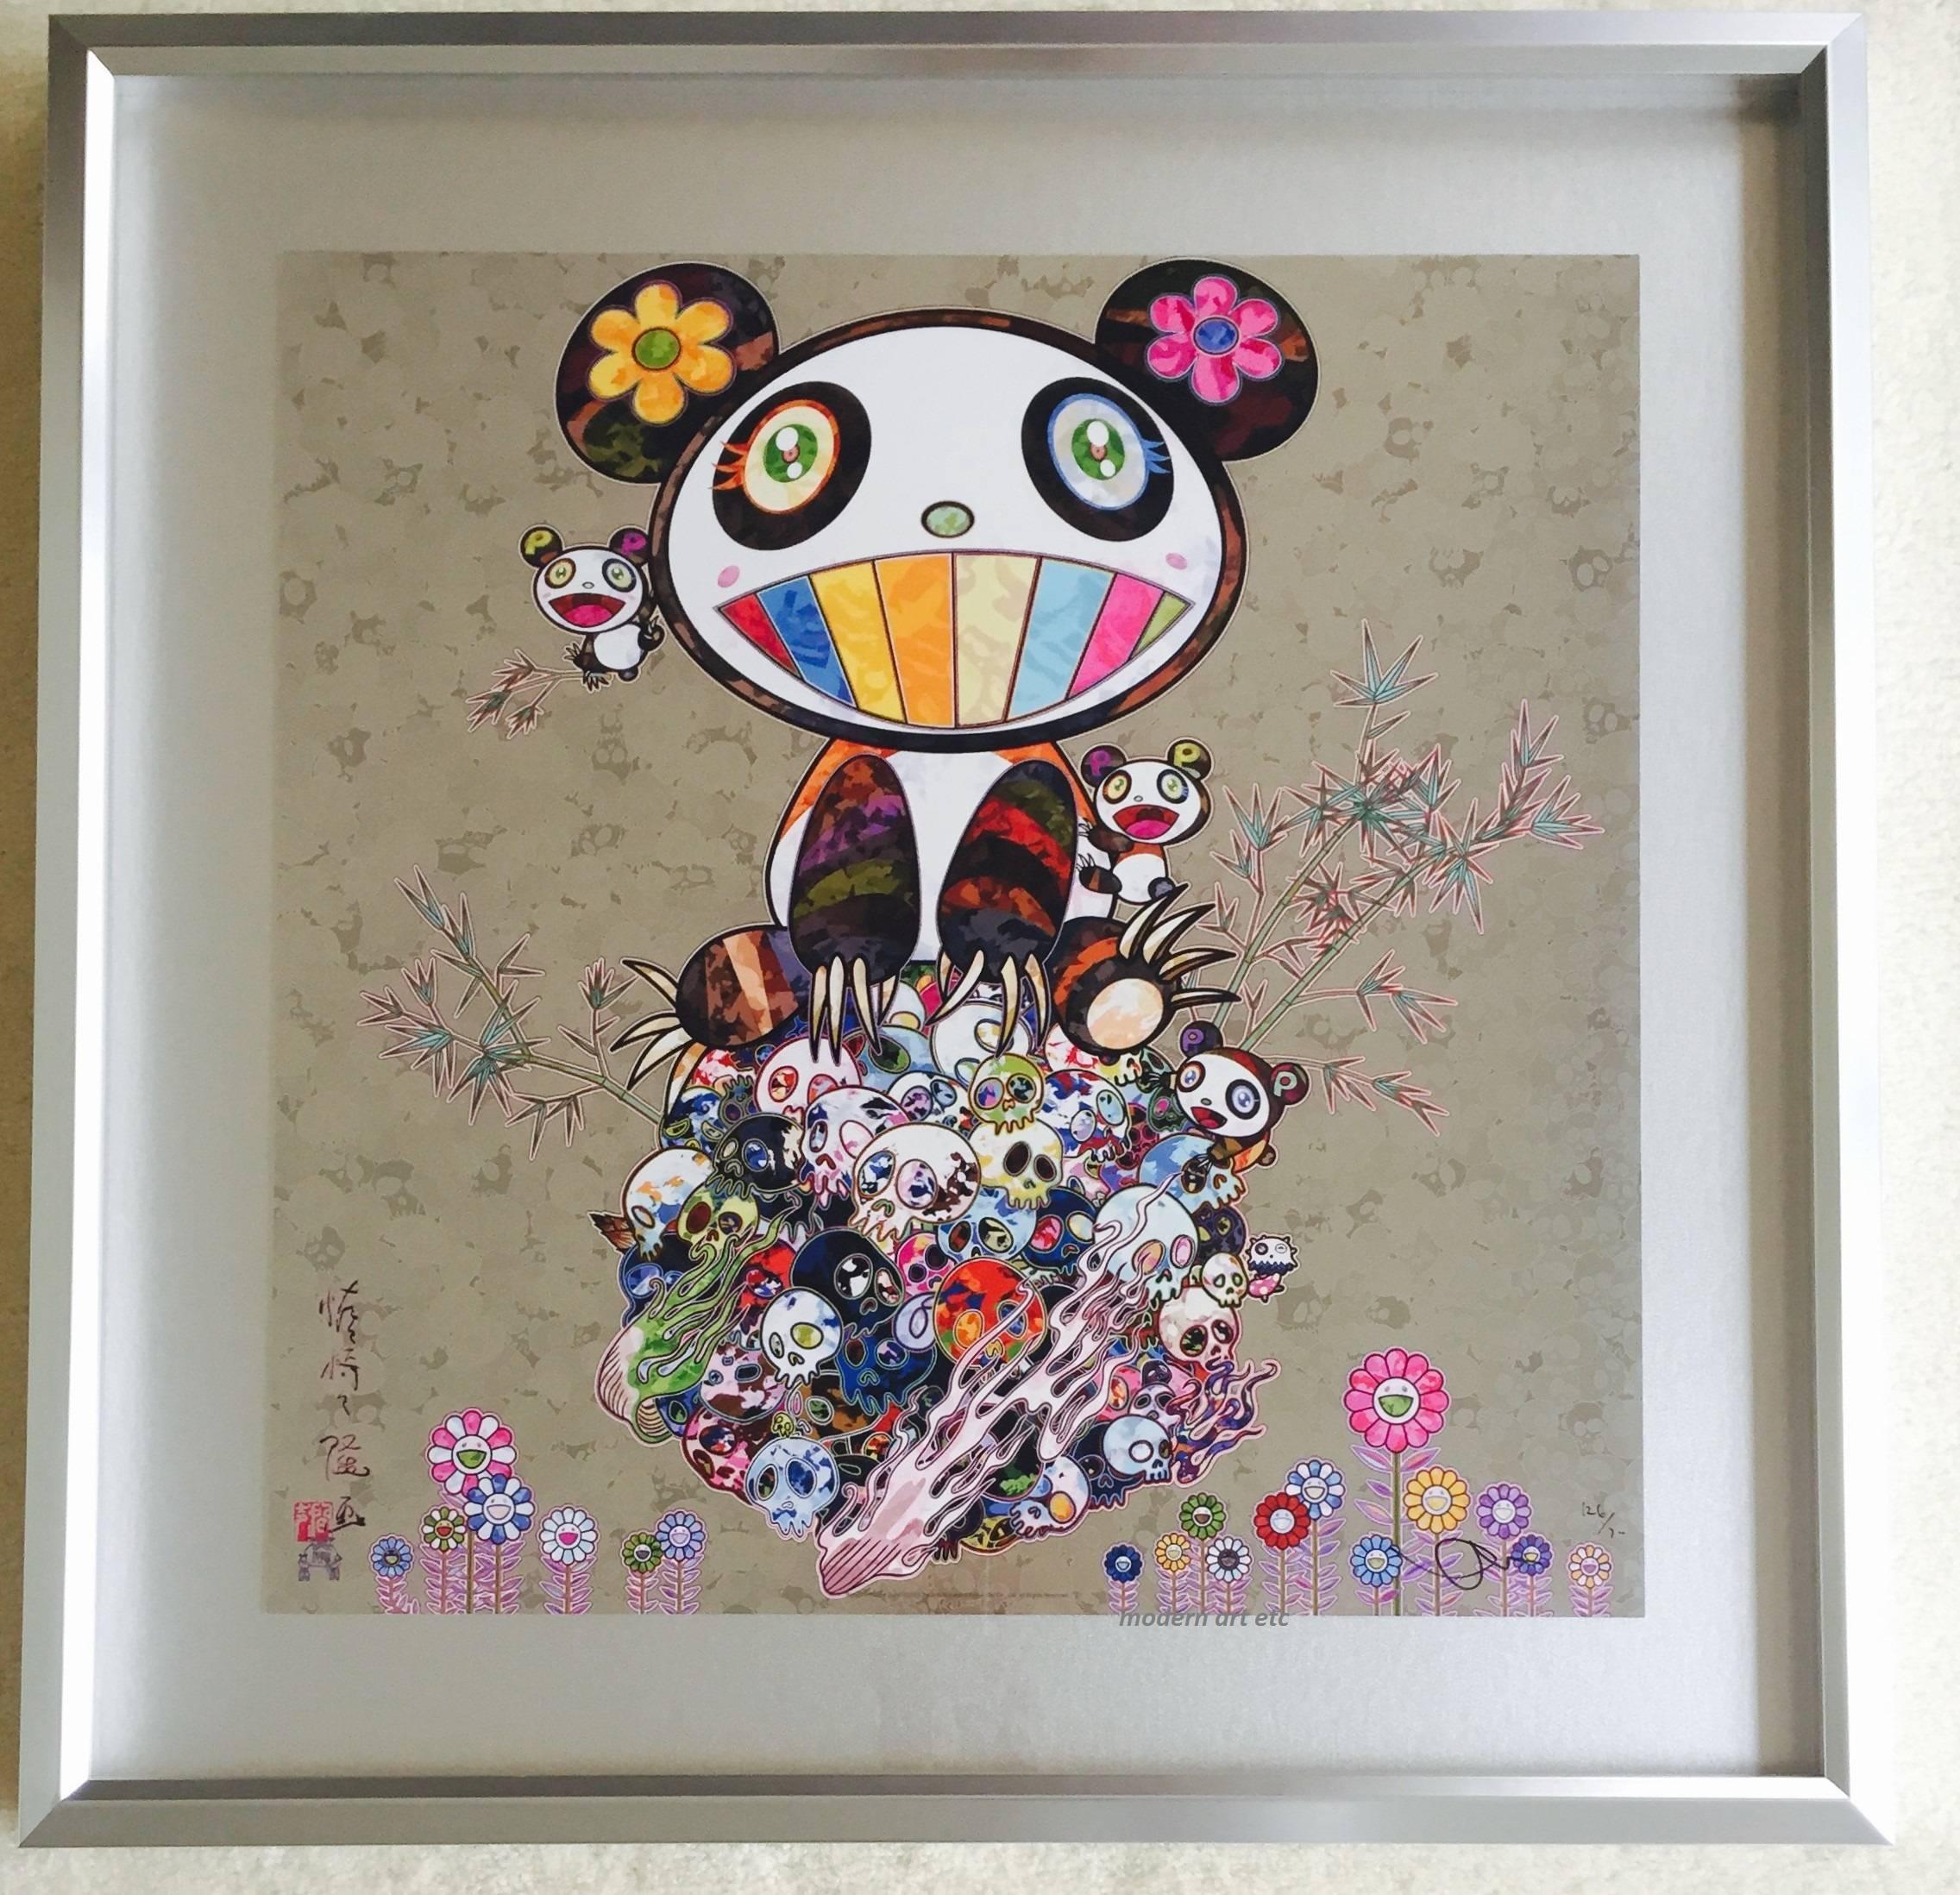 Takashi Murakami Figurative Print - Lithograph - Panda and Cubs -custom framed - Japanese pop art (panda and skulls)